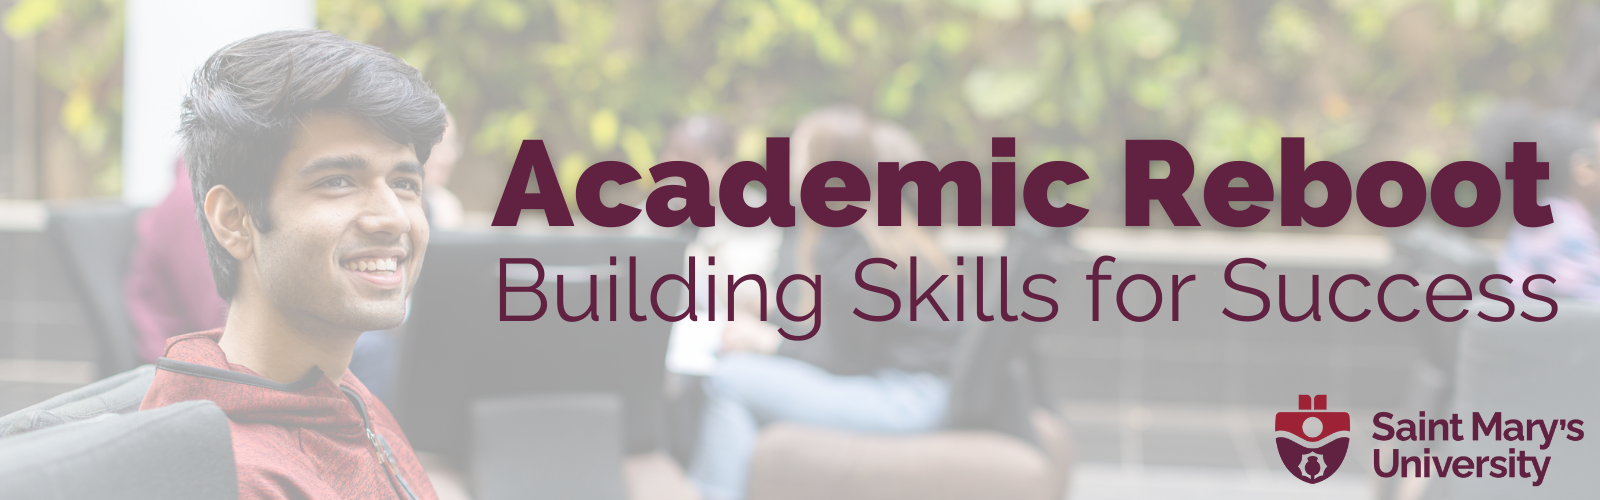 Academic Reboot: Building Skills for Success